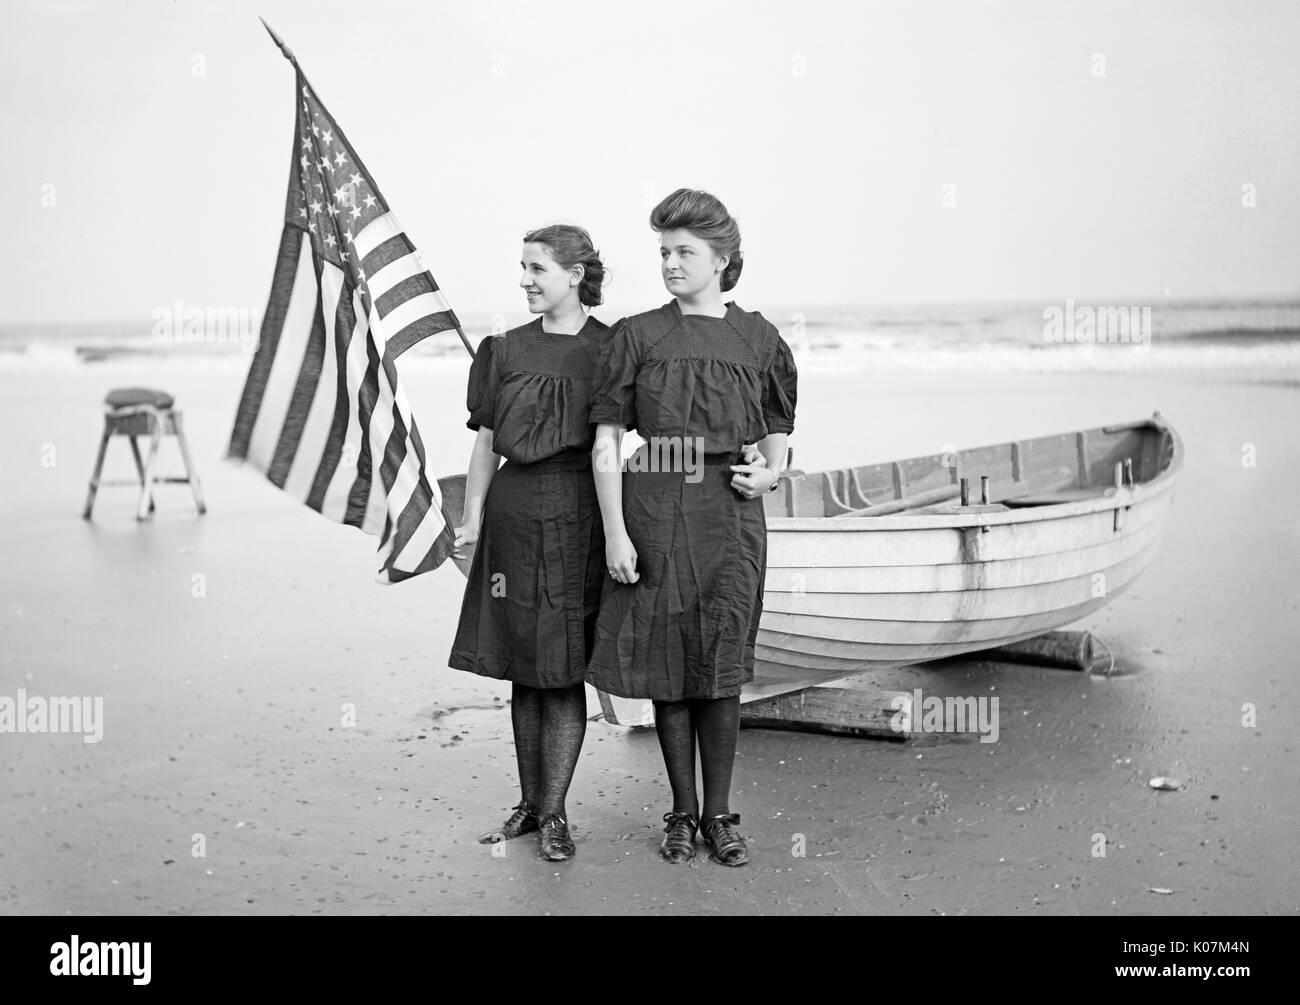 Zwei Frauen in historischen Badekostümen am Strand - Atlantik Stockfoto